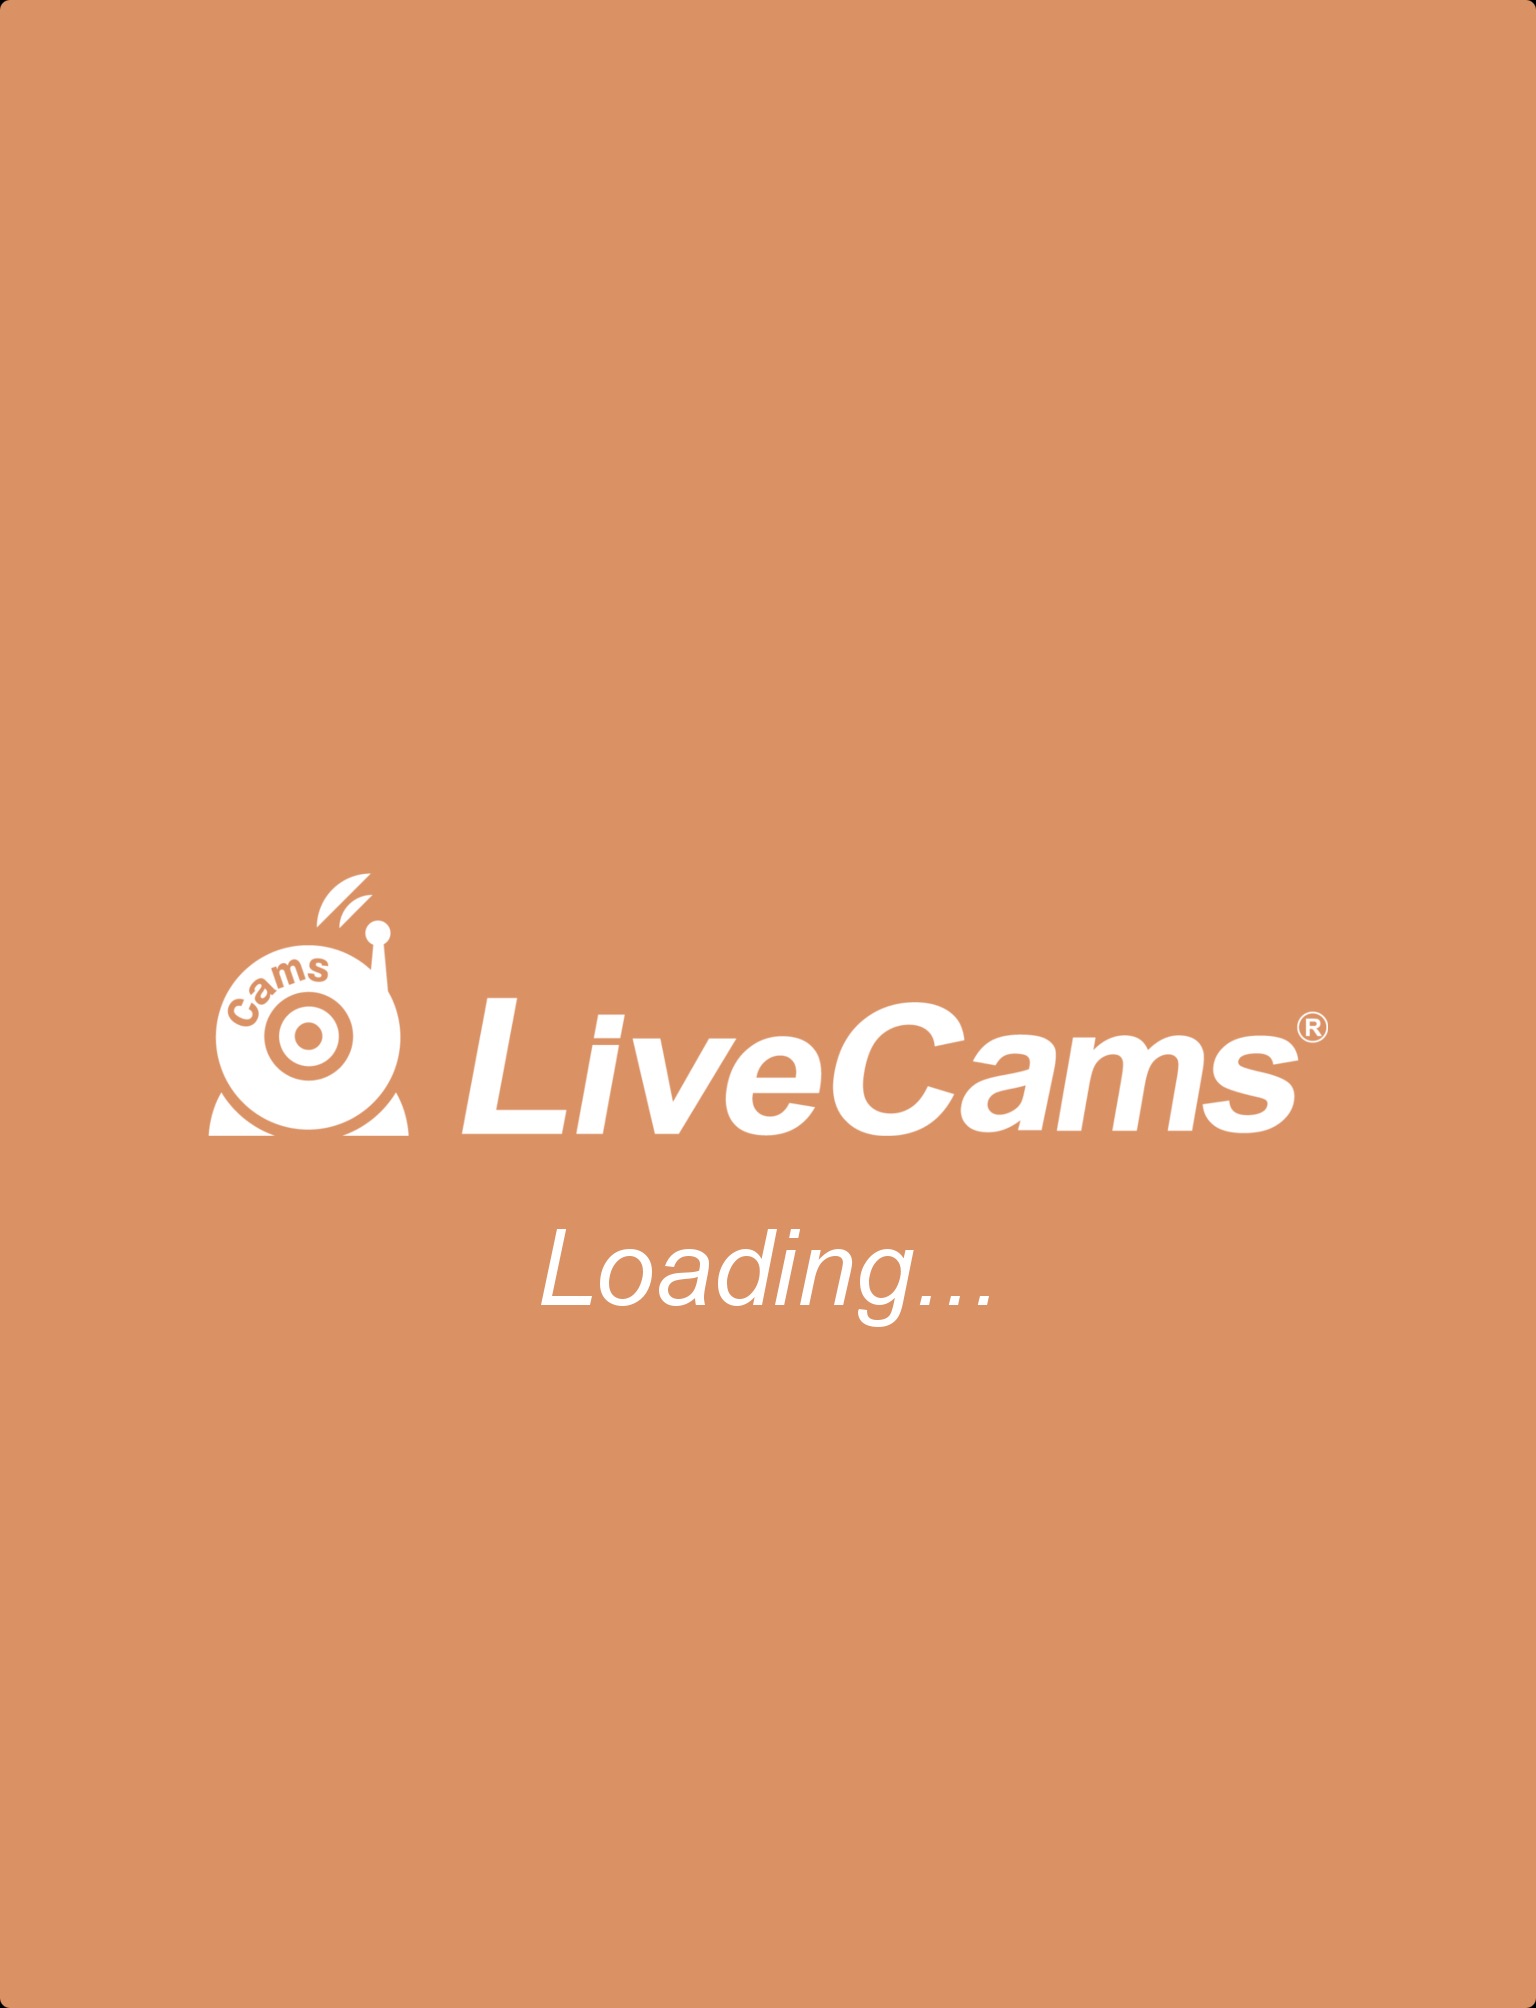 LiveCams for iPad screenshot 2